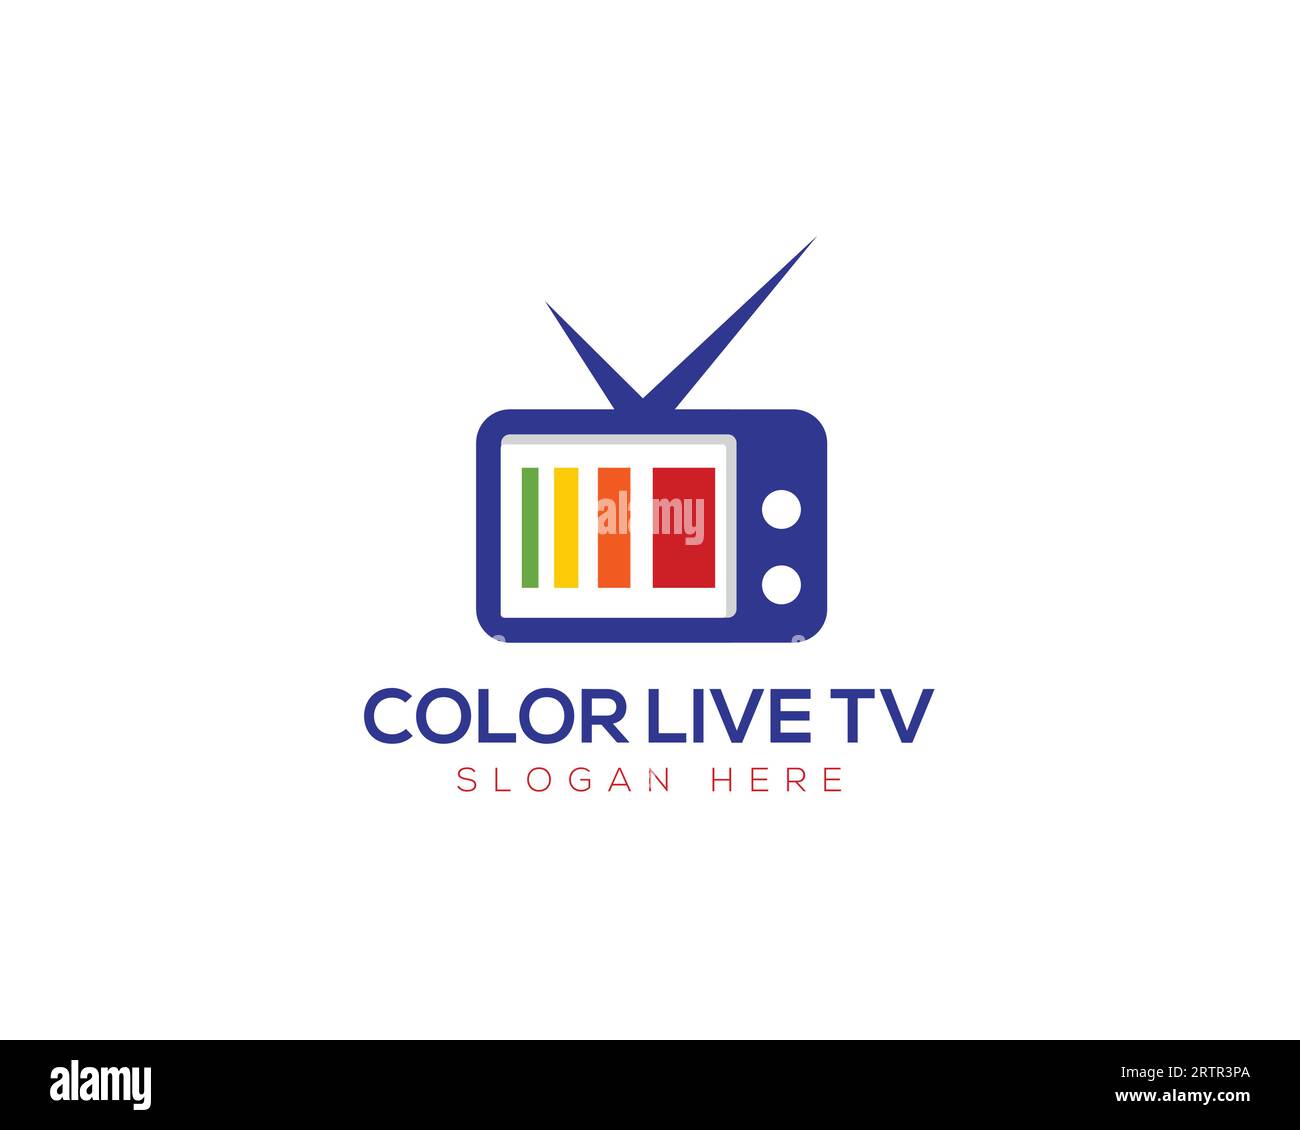 Vektorvorlage für TV-Logo. TV-Logo entwirft Konzeptvektorillustration. Live TV-Logo-Design in Farbe Stock Vektor